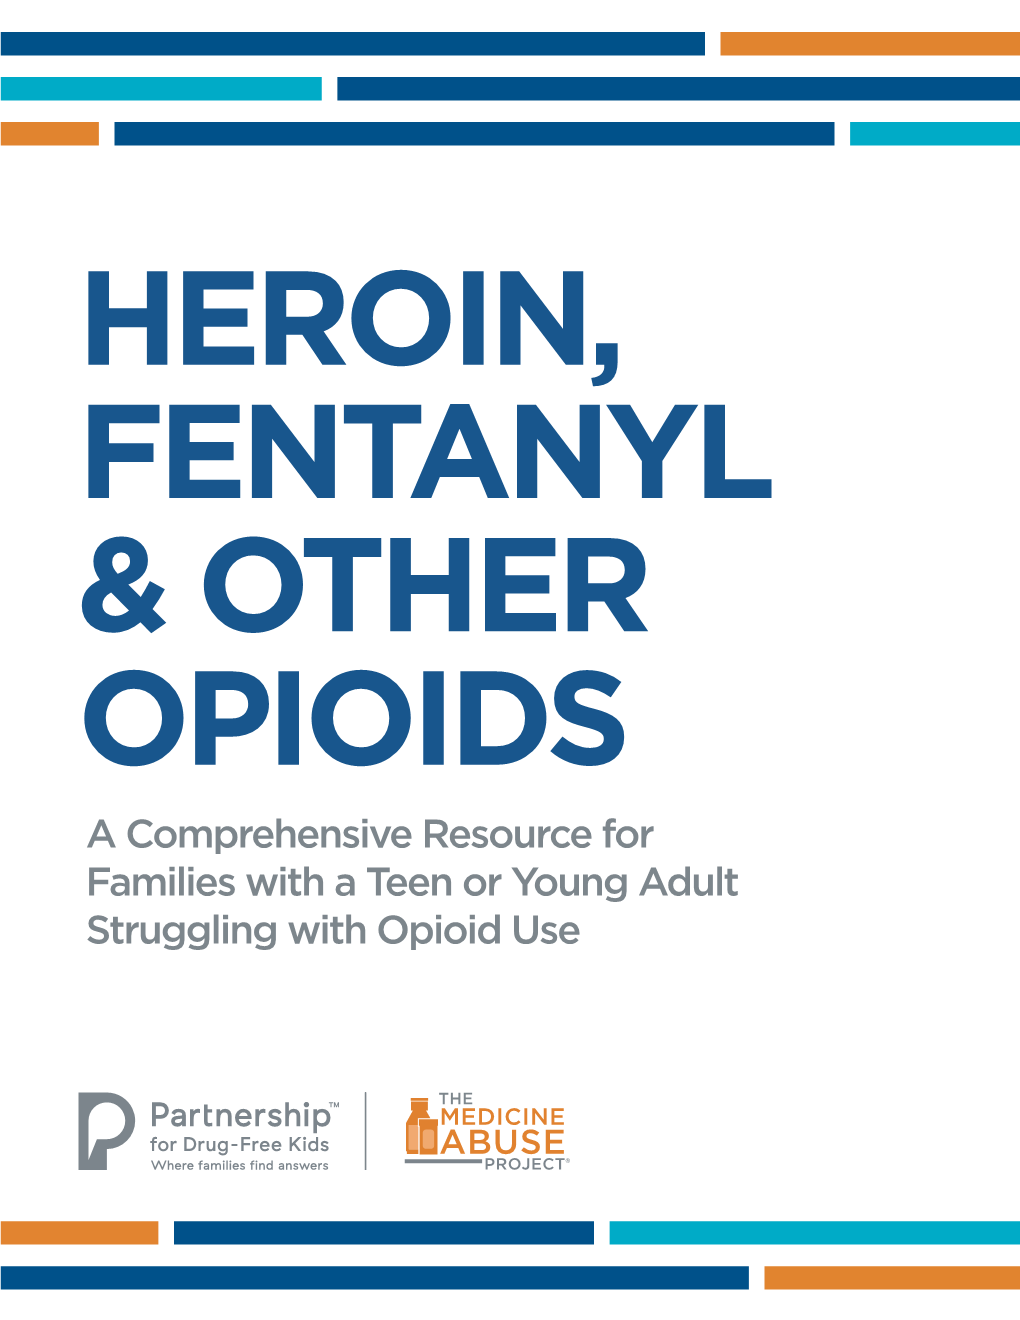 Heroin-Fentanyl-Other Opioids